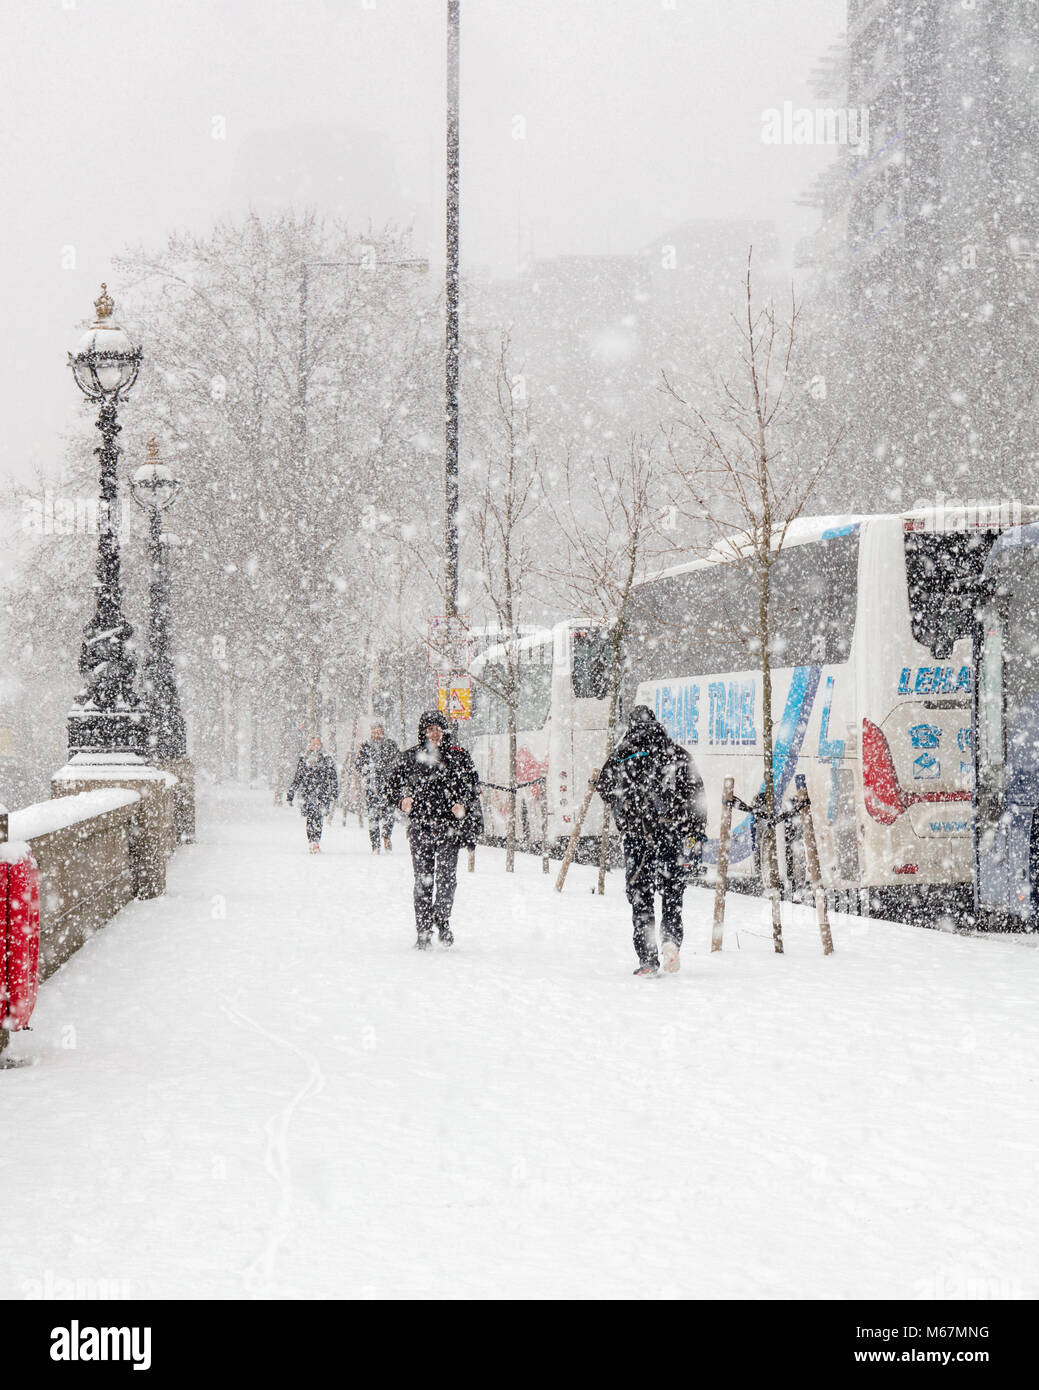 London, UK; 28th February 2018; Pedestrians Walking on Pavement through Snowstorm Stock Photo